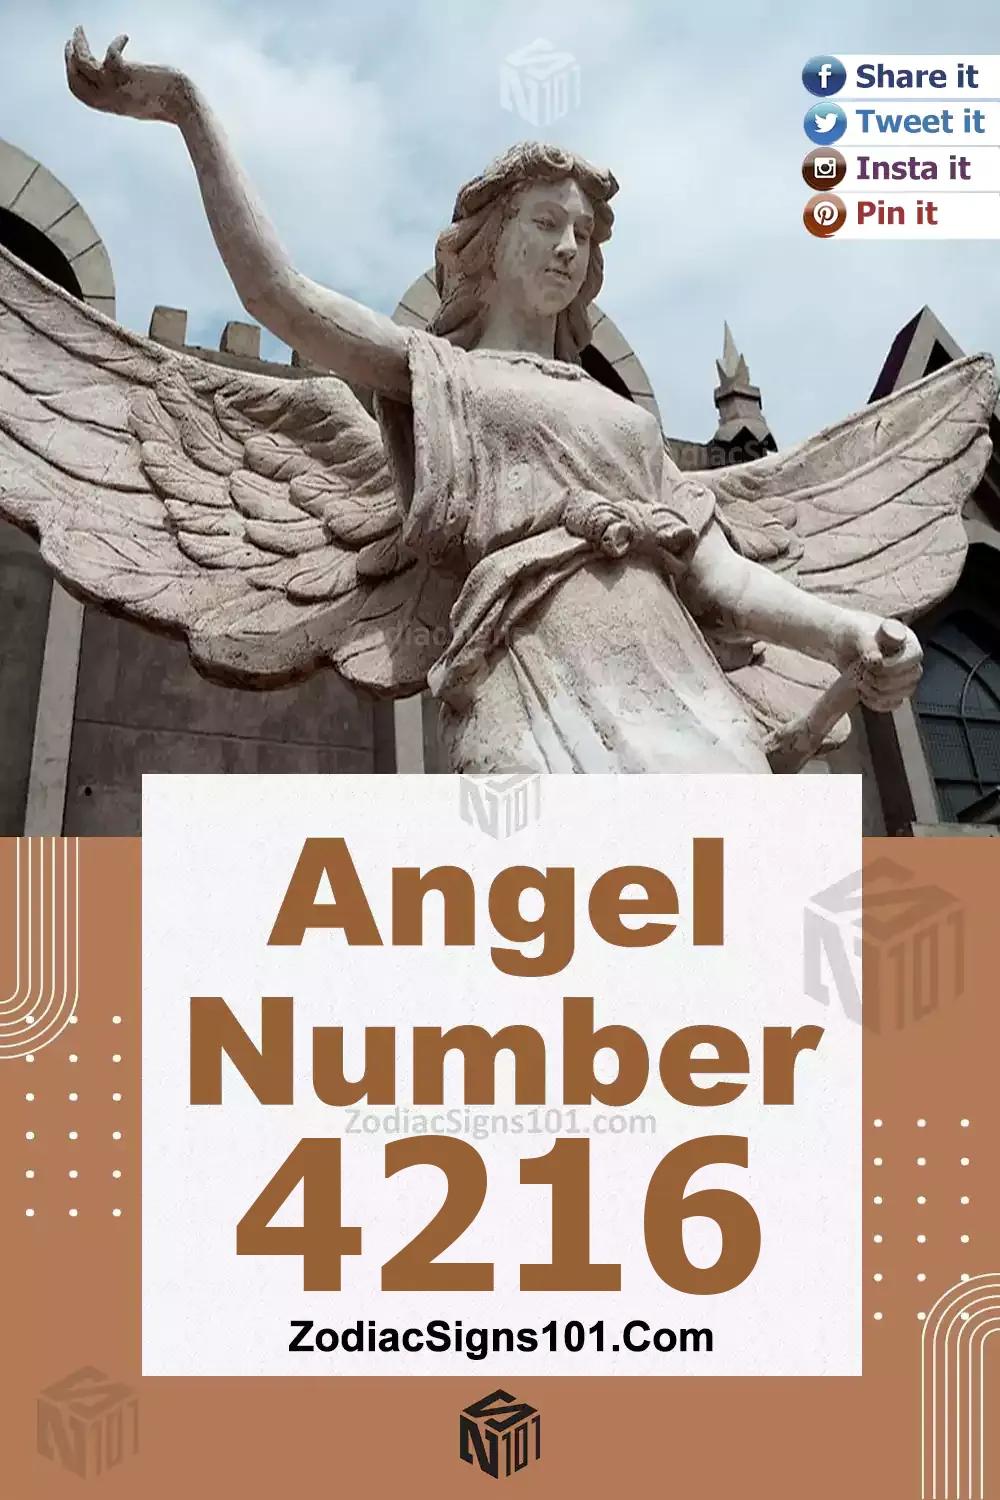 4216-Angel-Number-Meaning.jpg